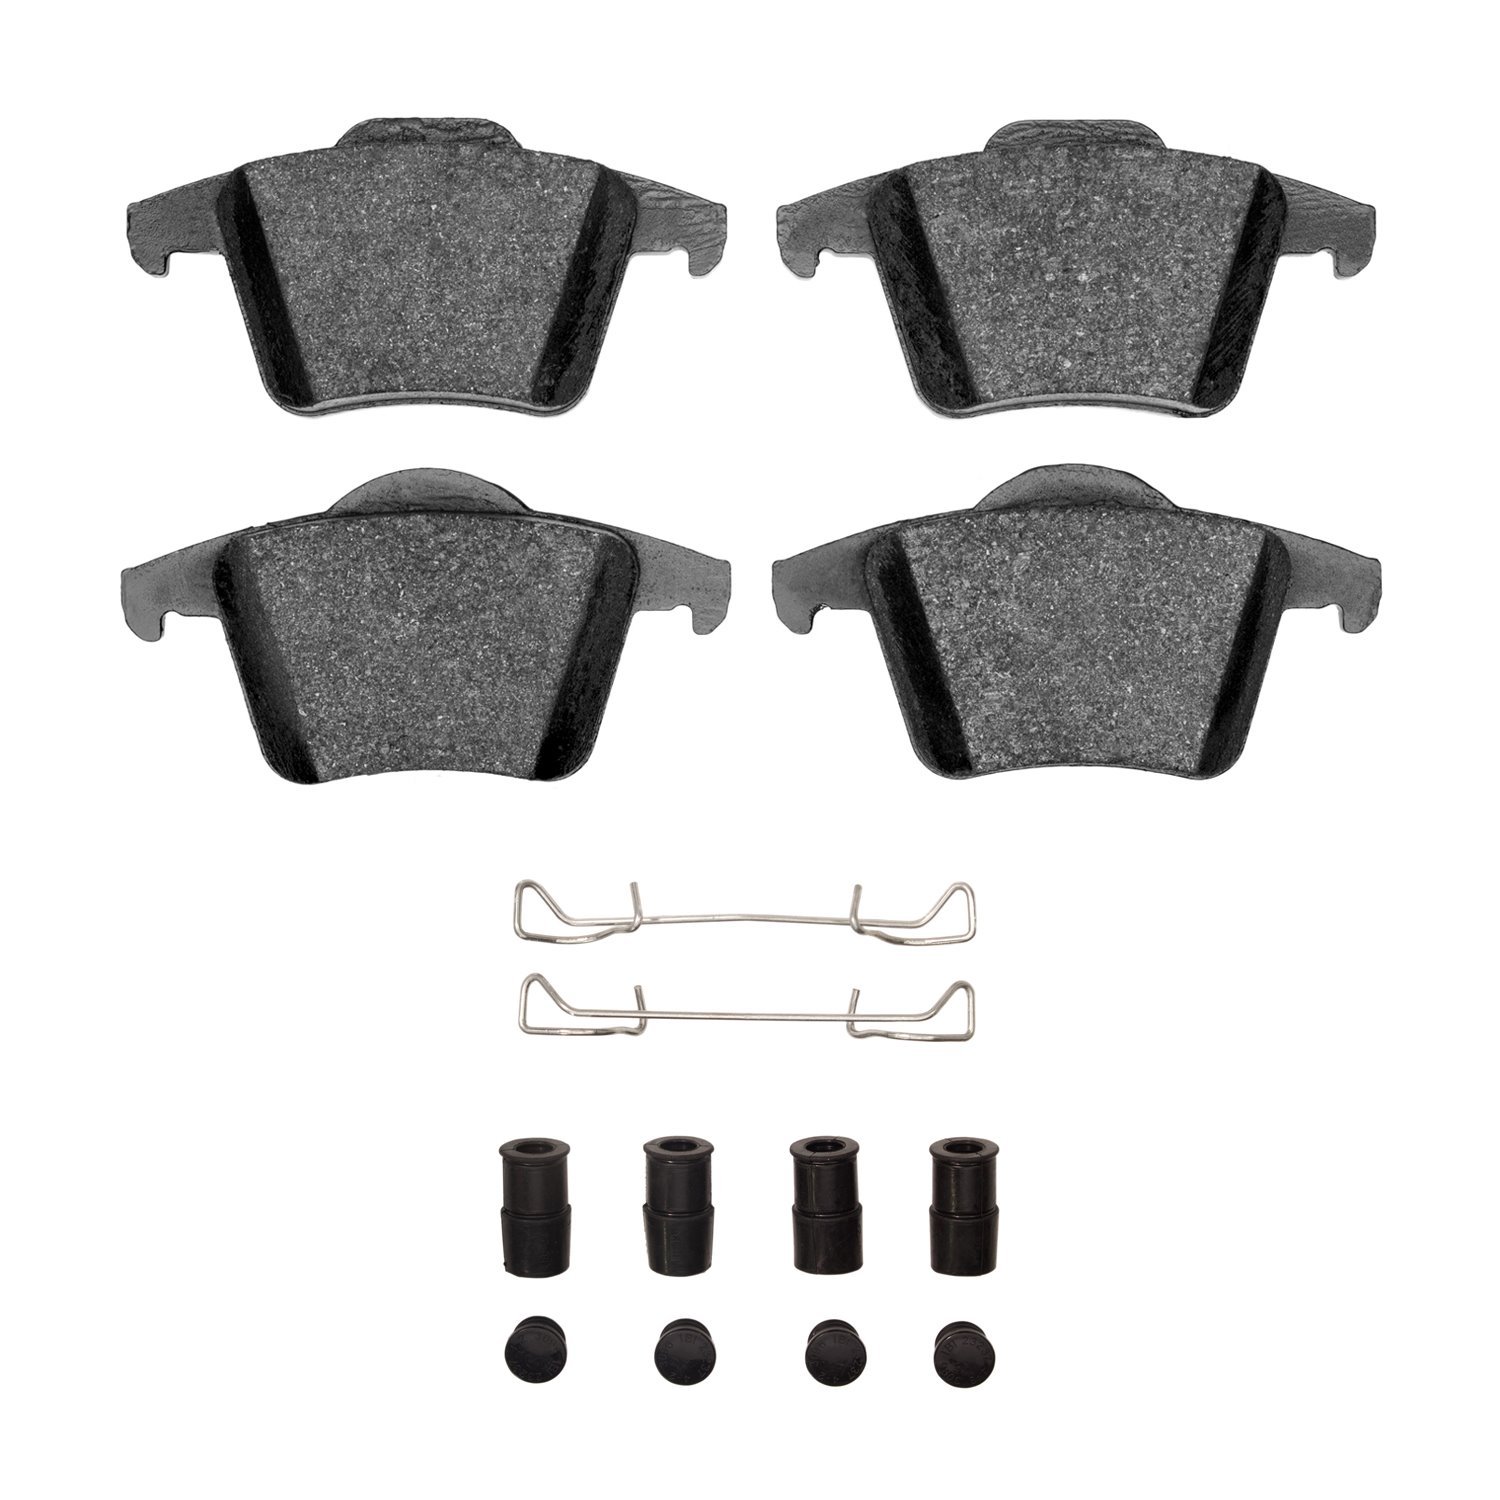 1551-0980-01 5000 Advanced Low-Metallic Brake Pads & Hardware Kit, 2003-2014 Volvo, Position: Rear